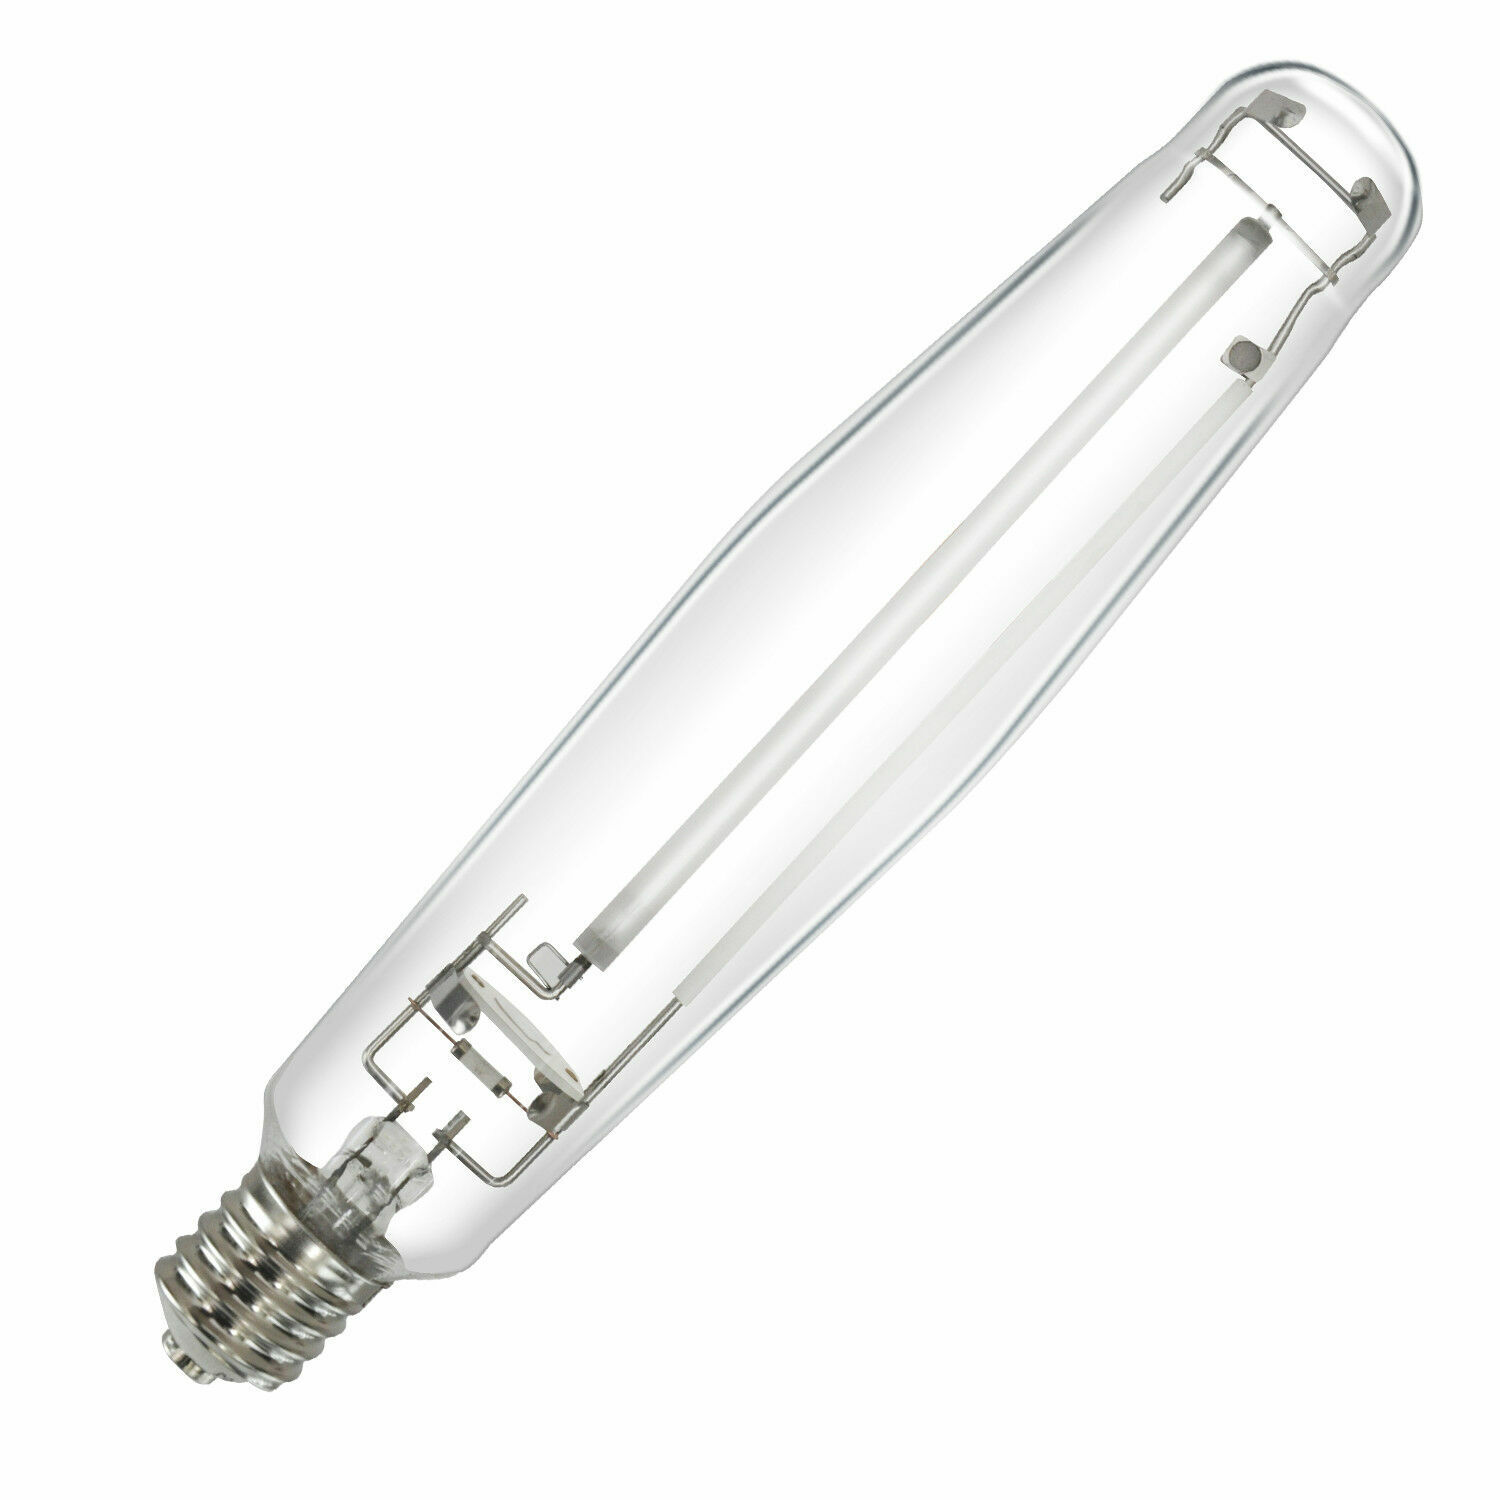 iPower 400/600/1000W HPS High Pressure Sodium Metal Halide Grow Light Bulb Lamp